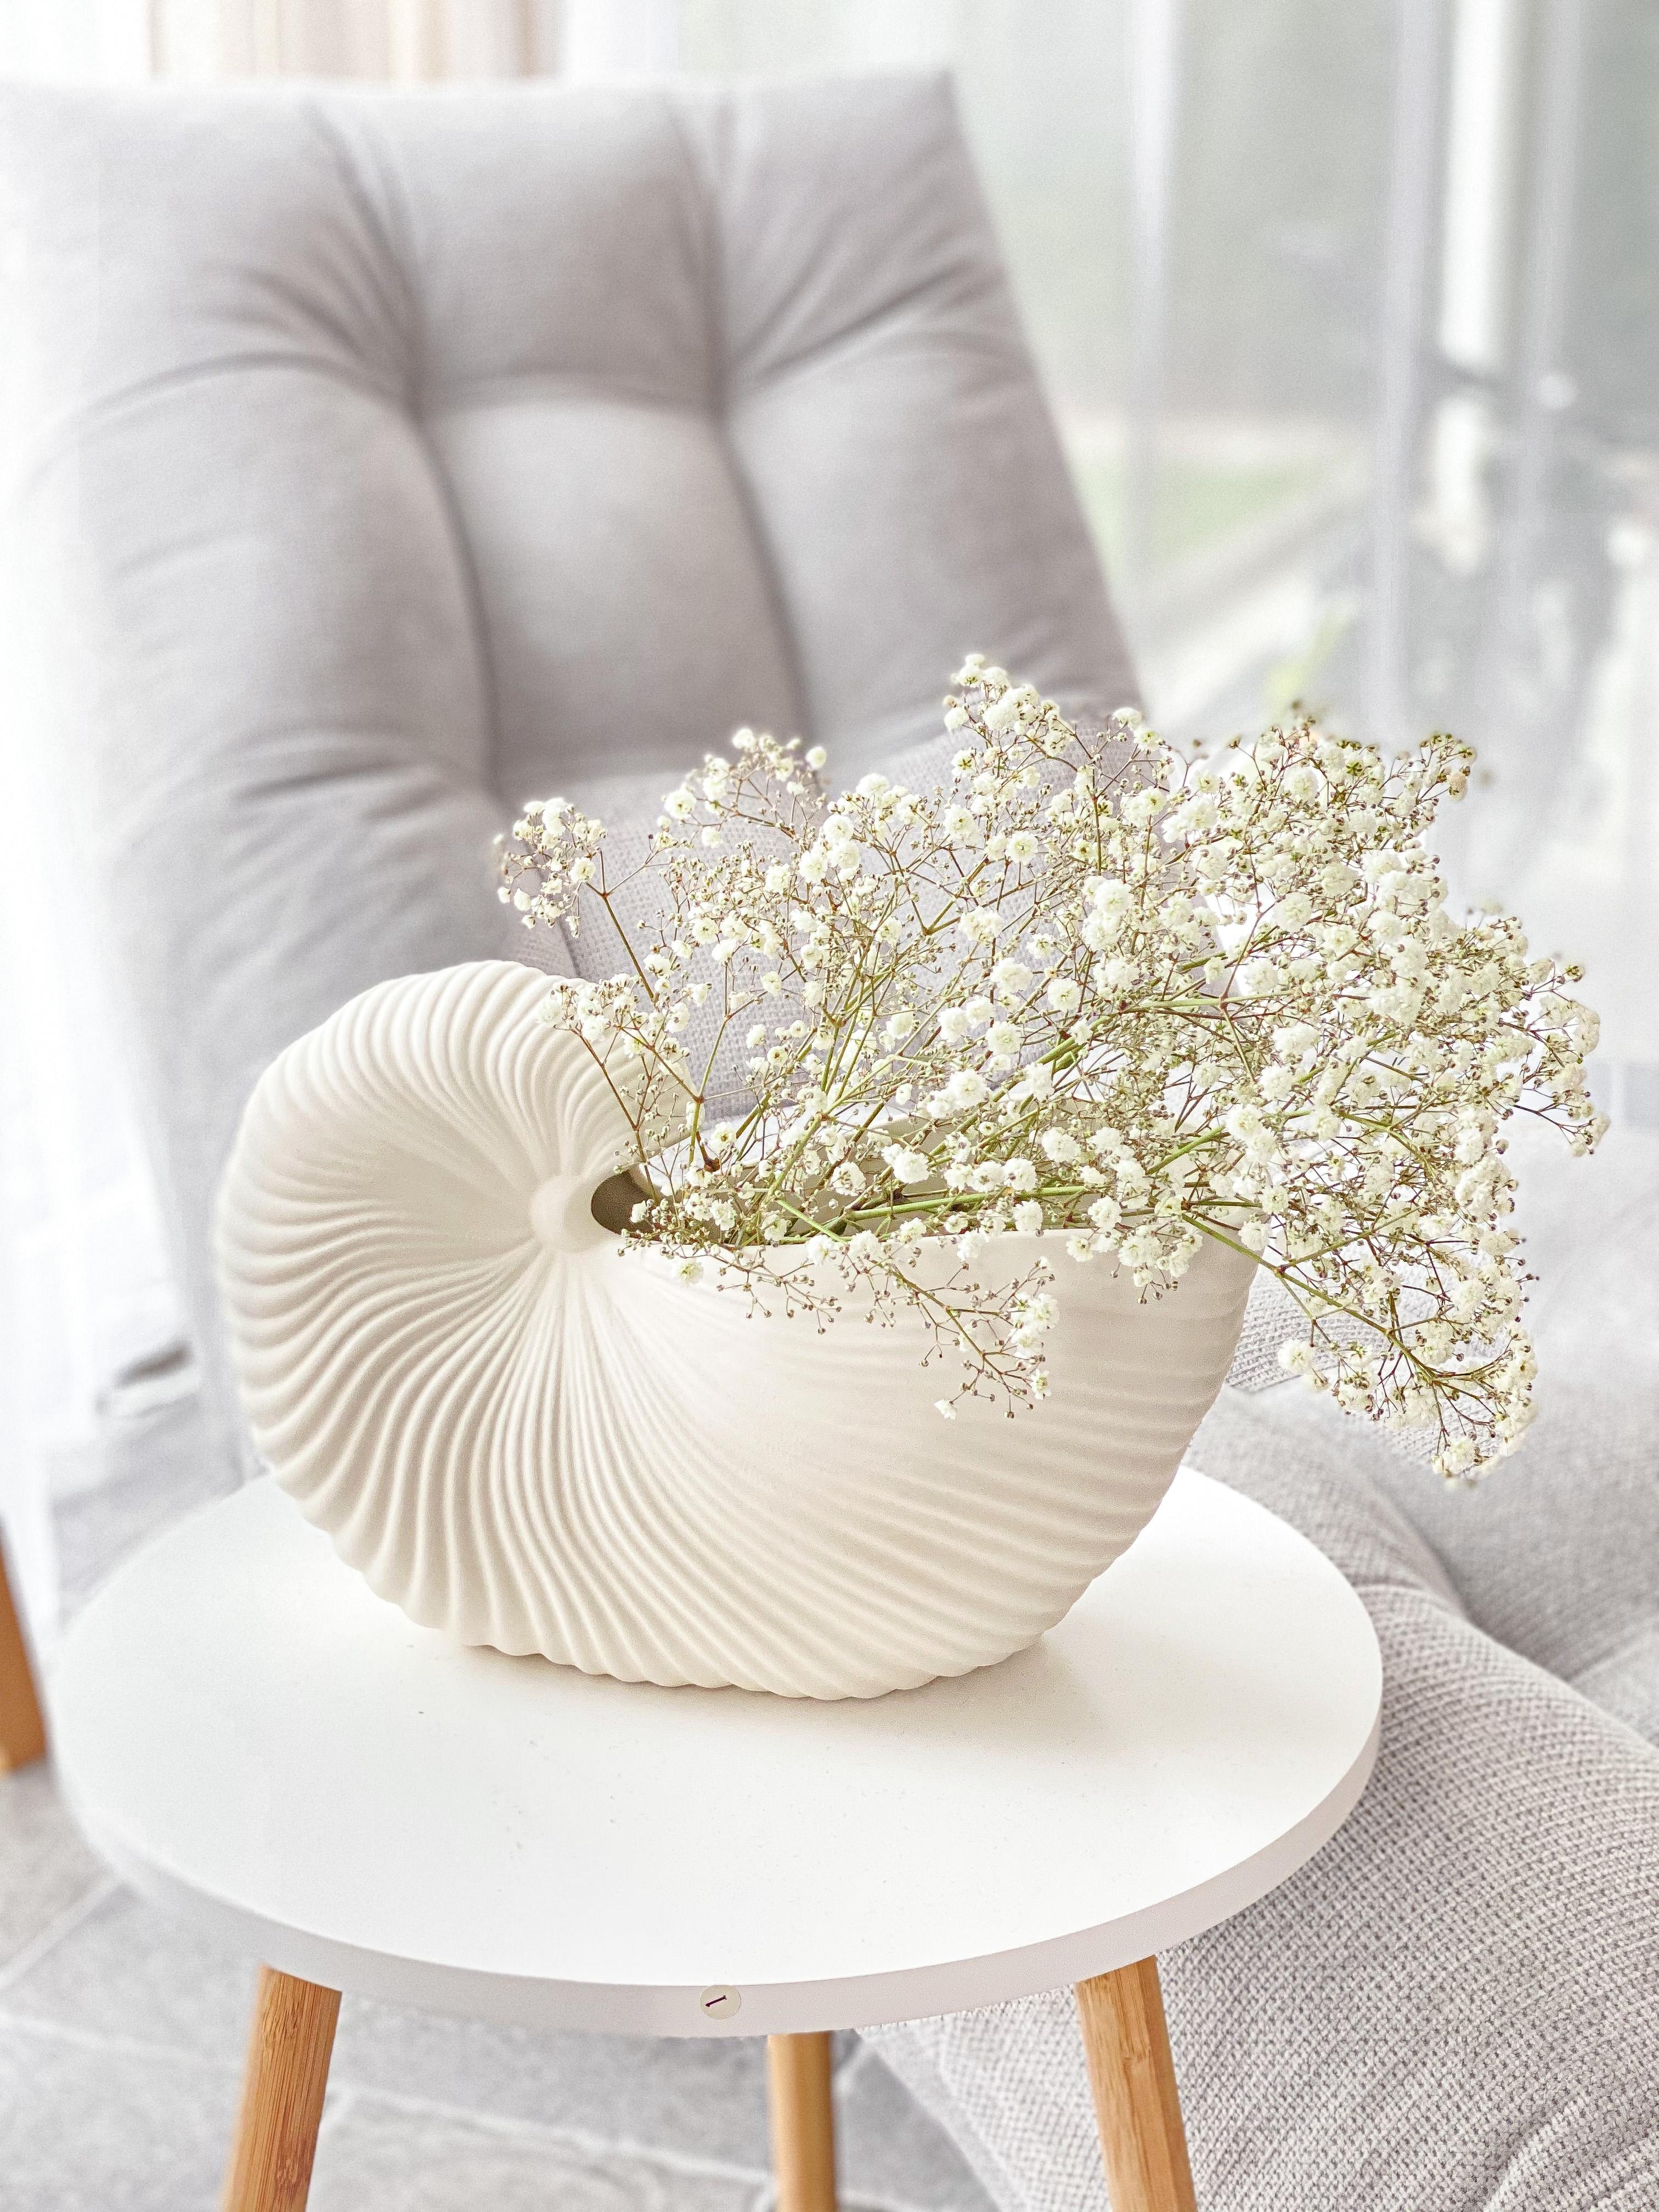 #fermliving #vasen #blumenvase #blumen #flowers #home #sessel  #hygge #skandinavisch #wohnzimmer